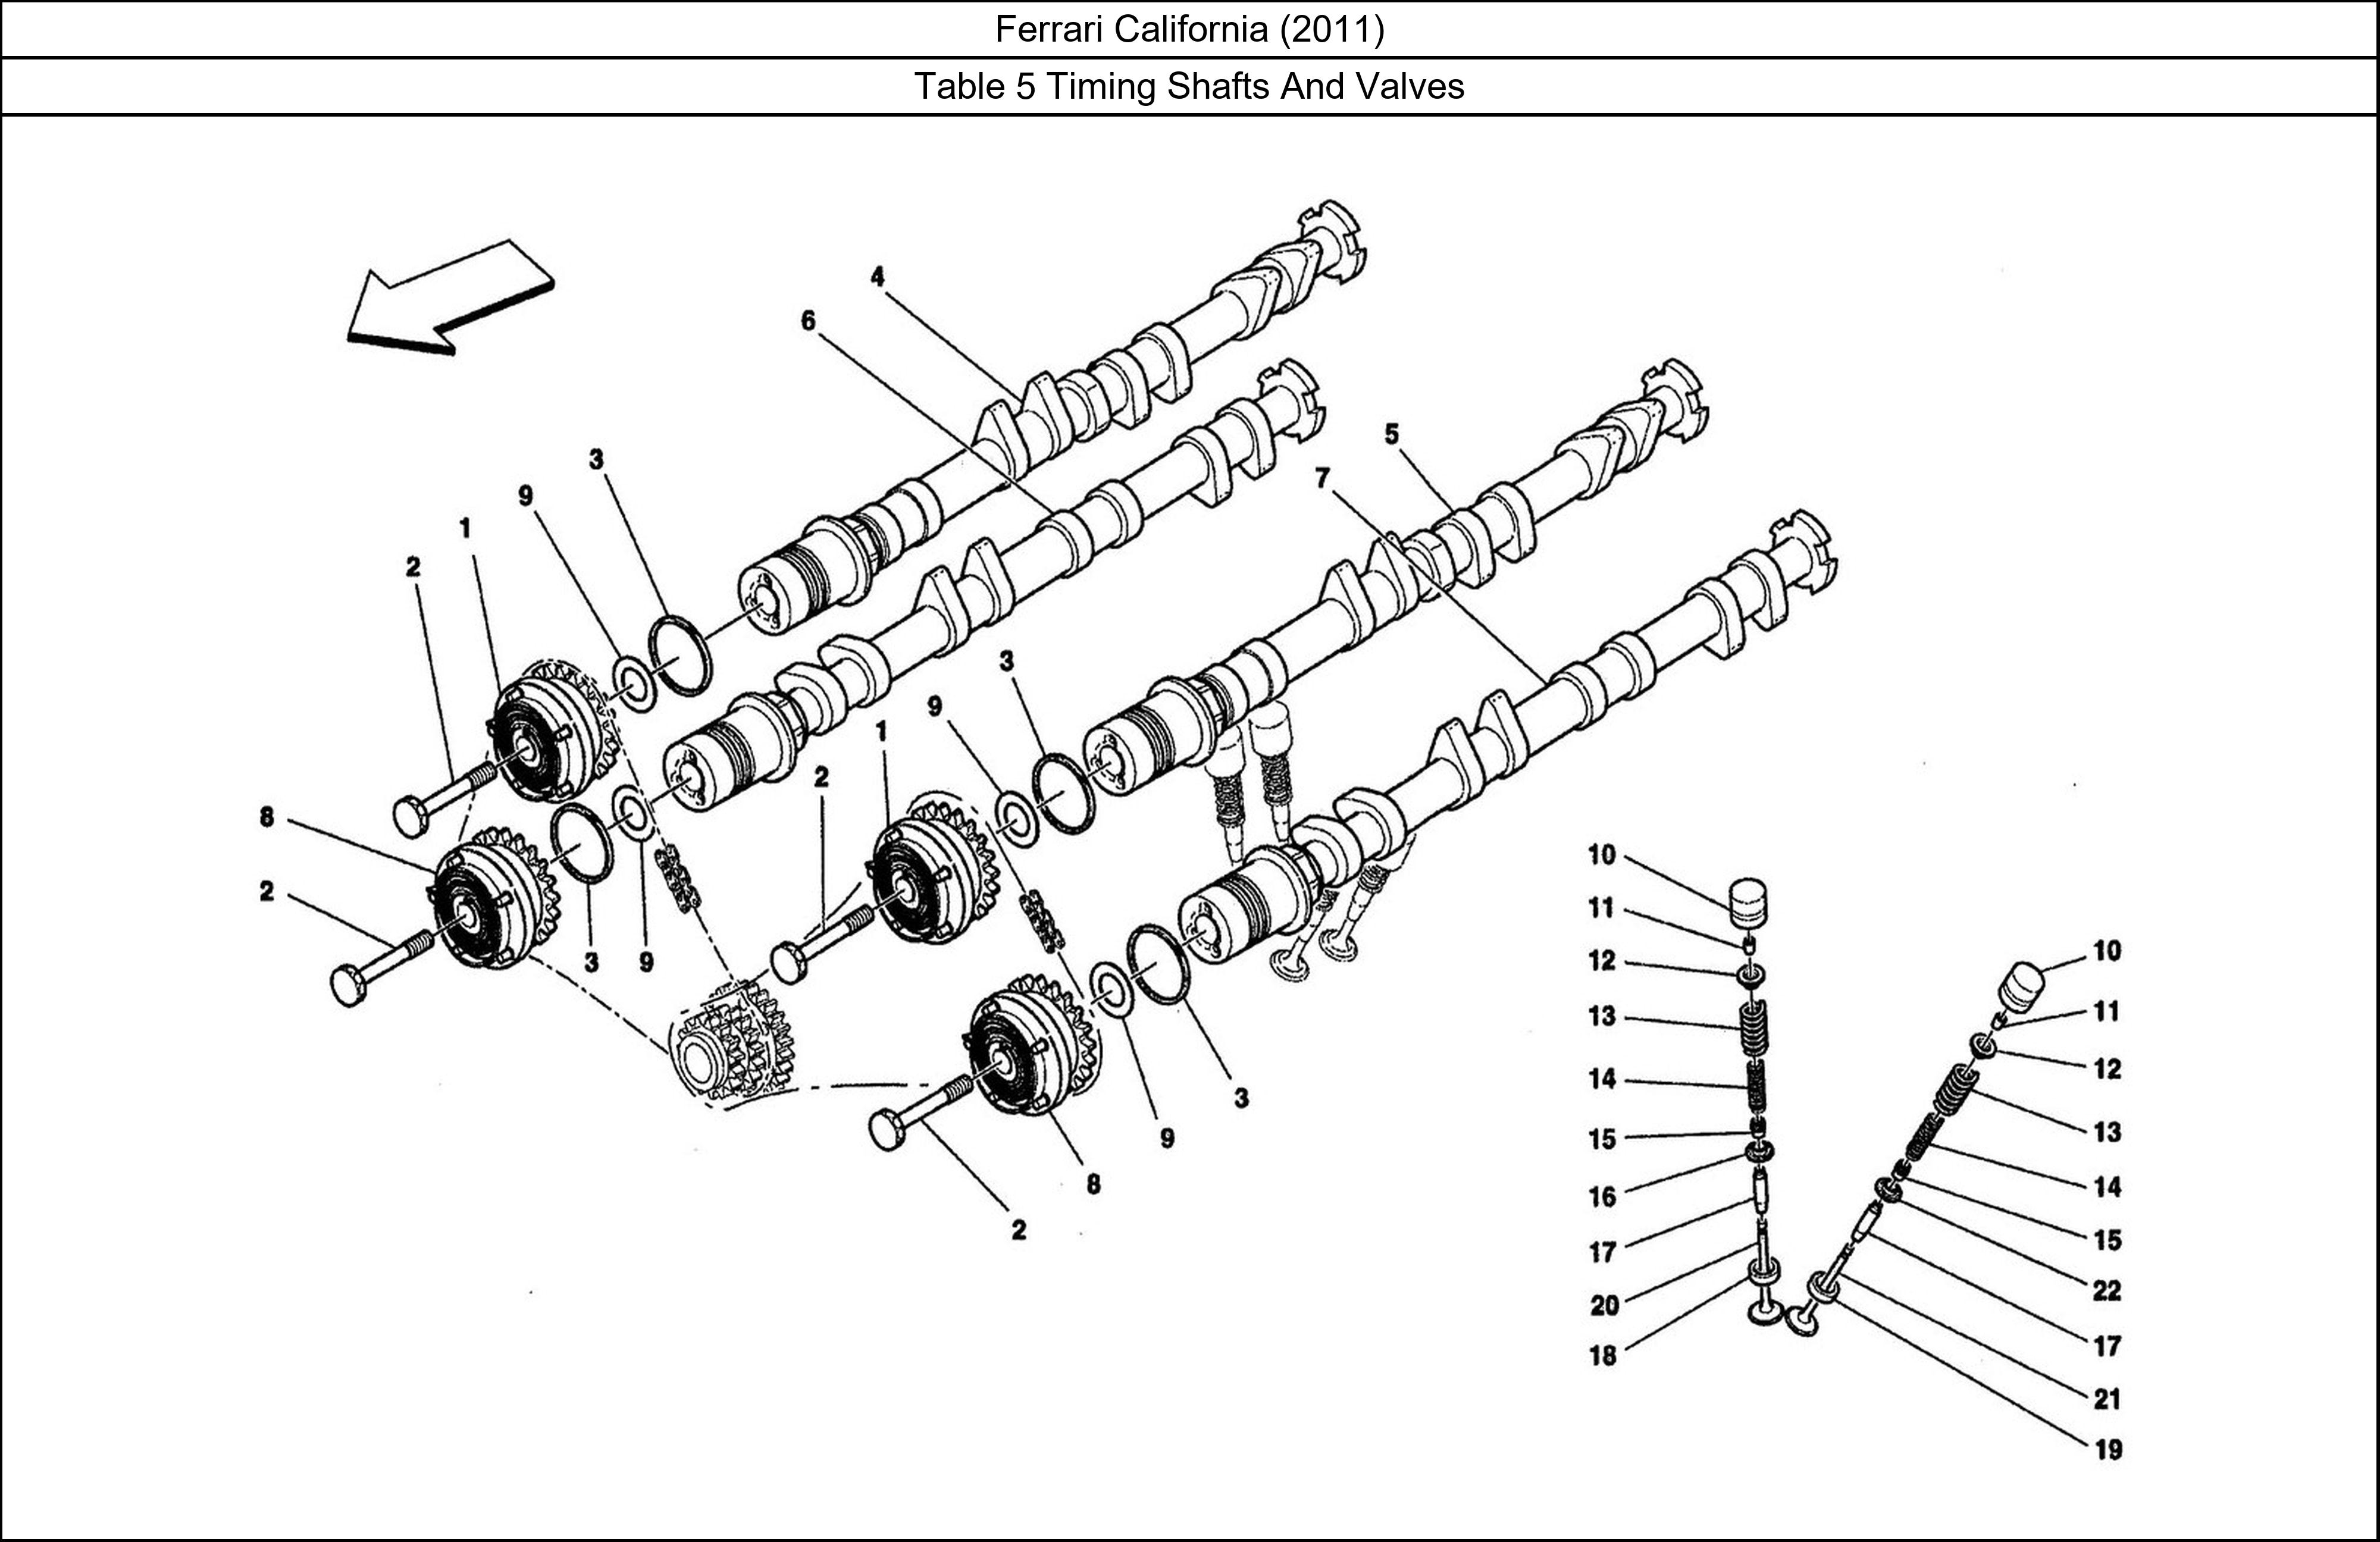 Ferrari Parts Ferrari California (2011) Table 5 Timing Shafts And Valves